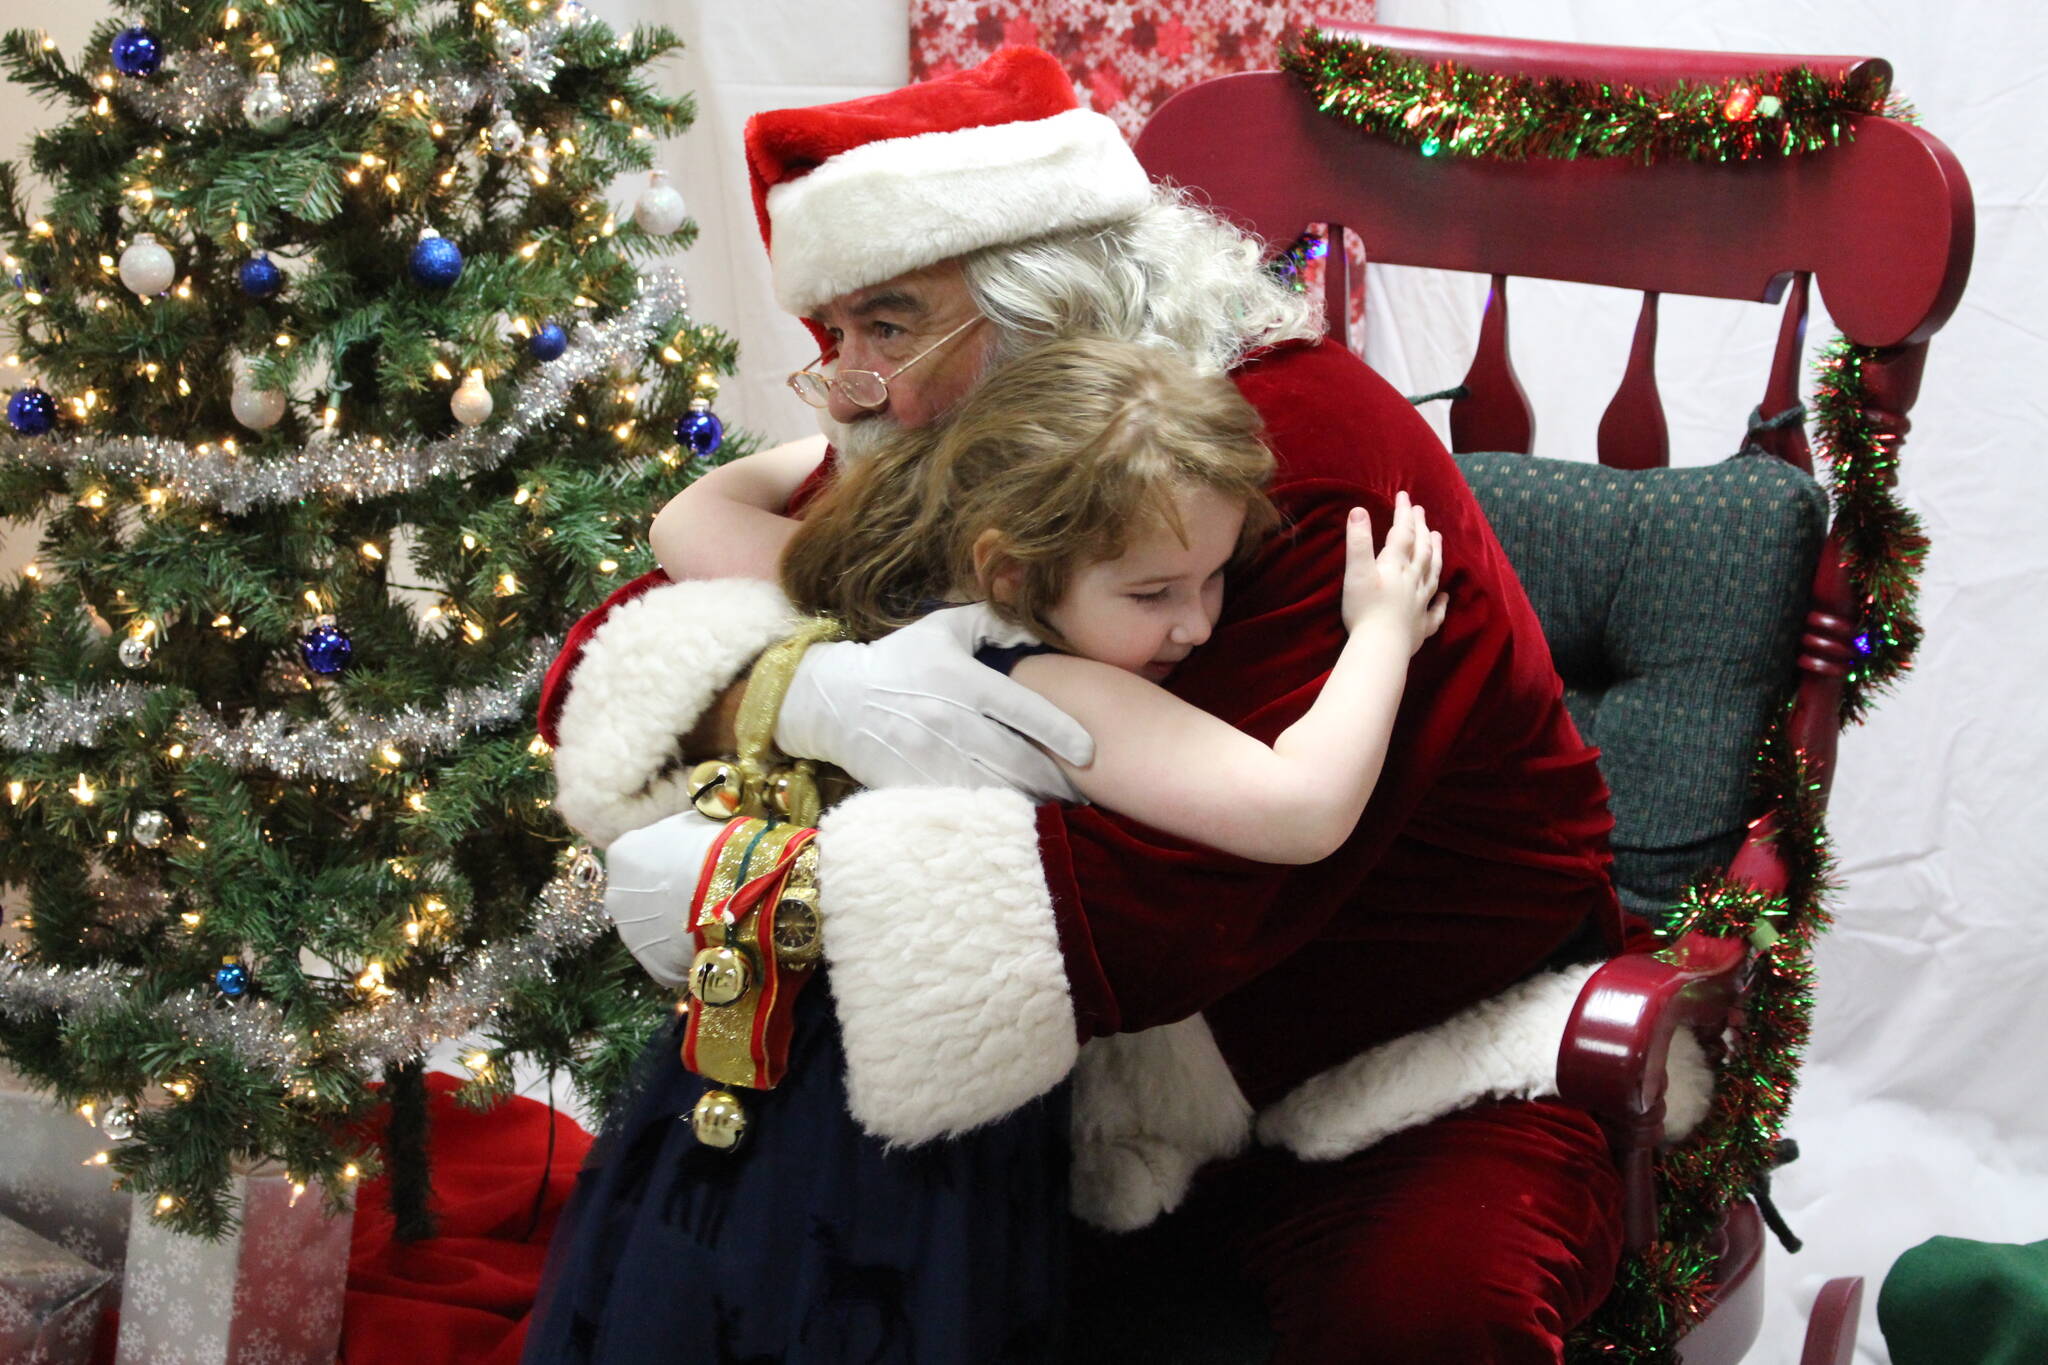 Genna Stormer gives Santa a hug during Christmas Comes to Nikiski at the Nikiski Community Recreation Center on Dec. 14, 2019. (Photo by Brian Mazurek/Peninsula Clarion)